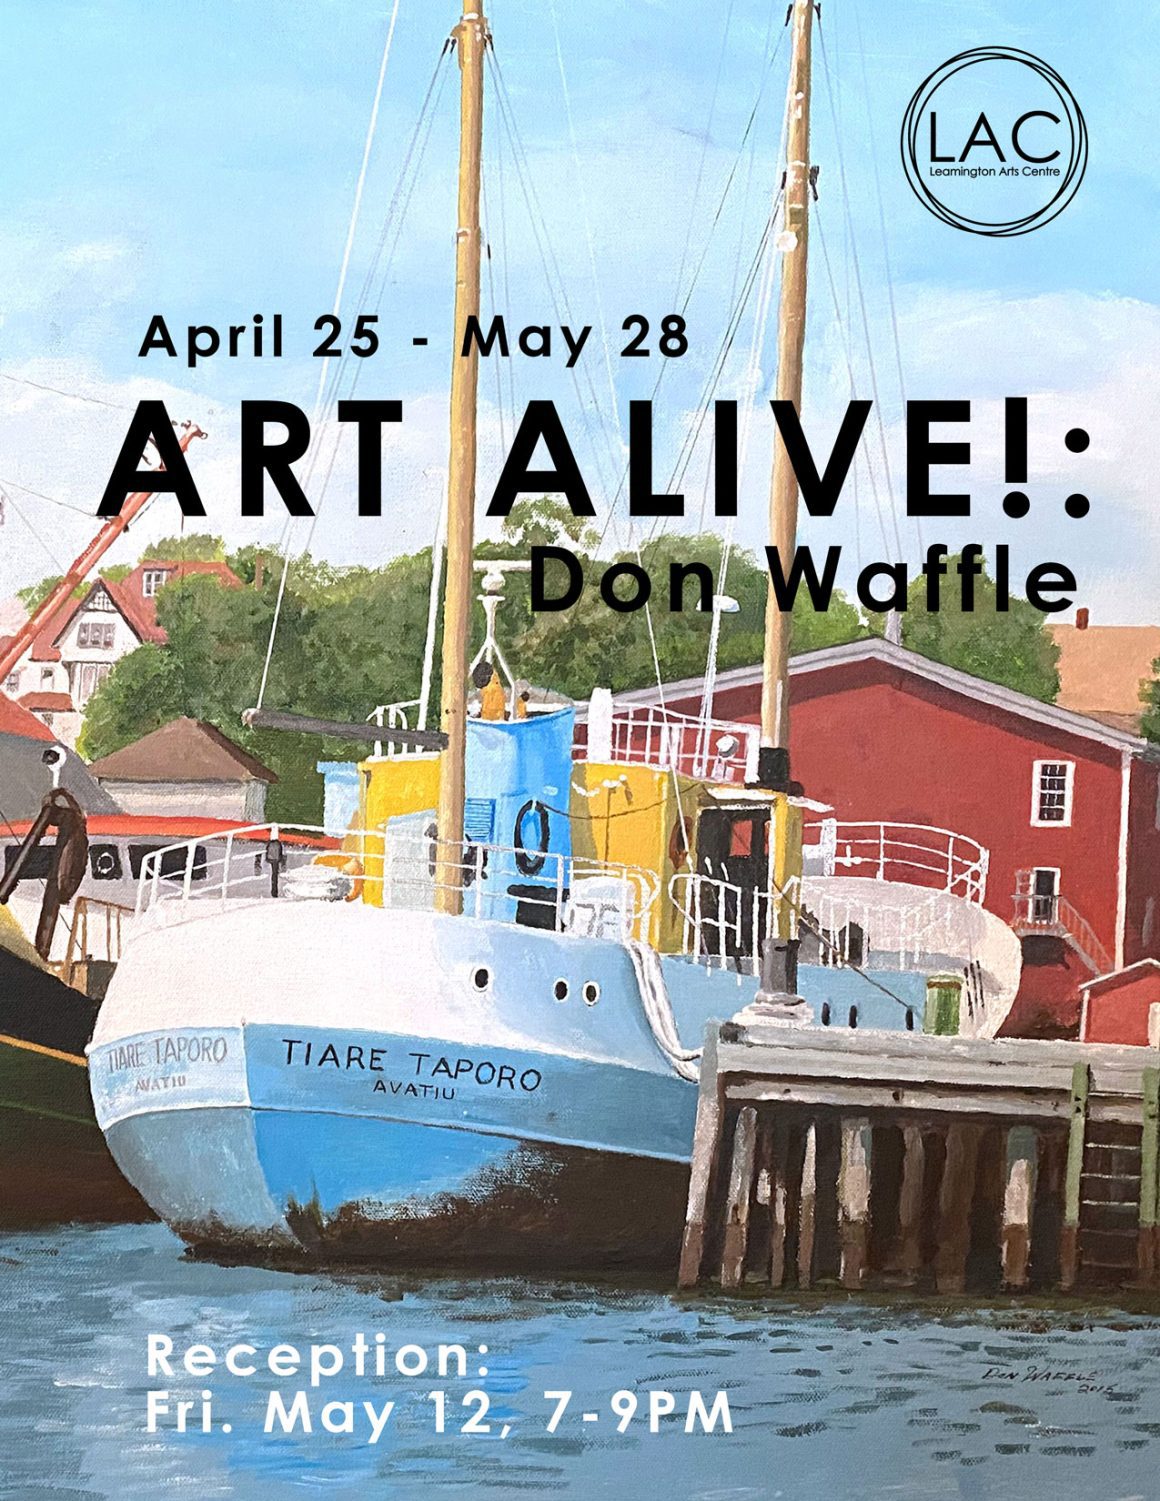 ART ALIVE! Don Waffle